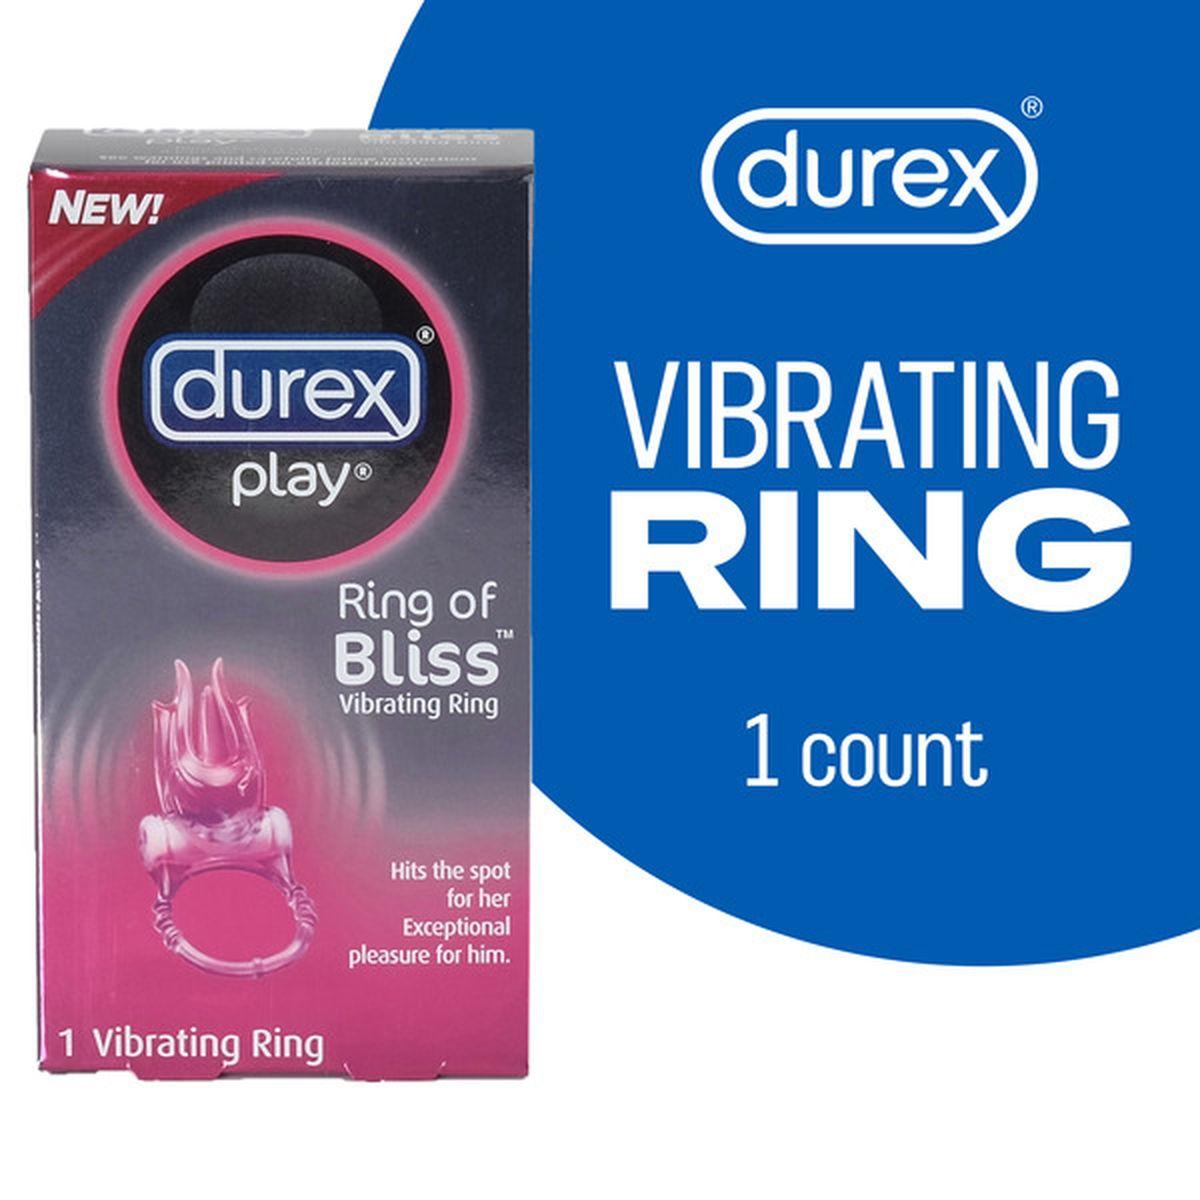 Vibrating ring